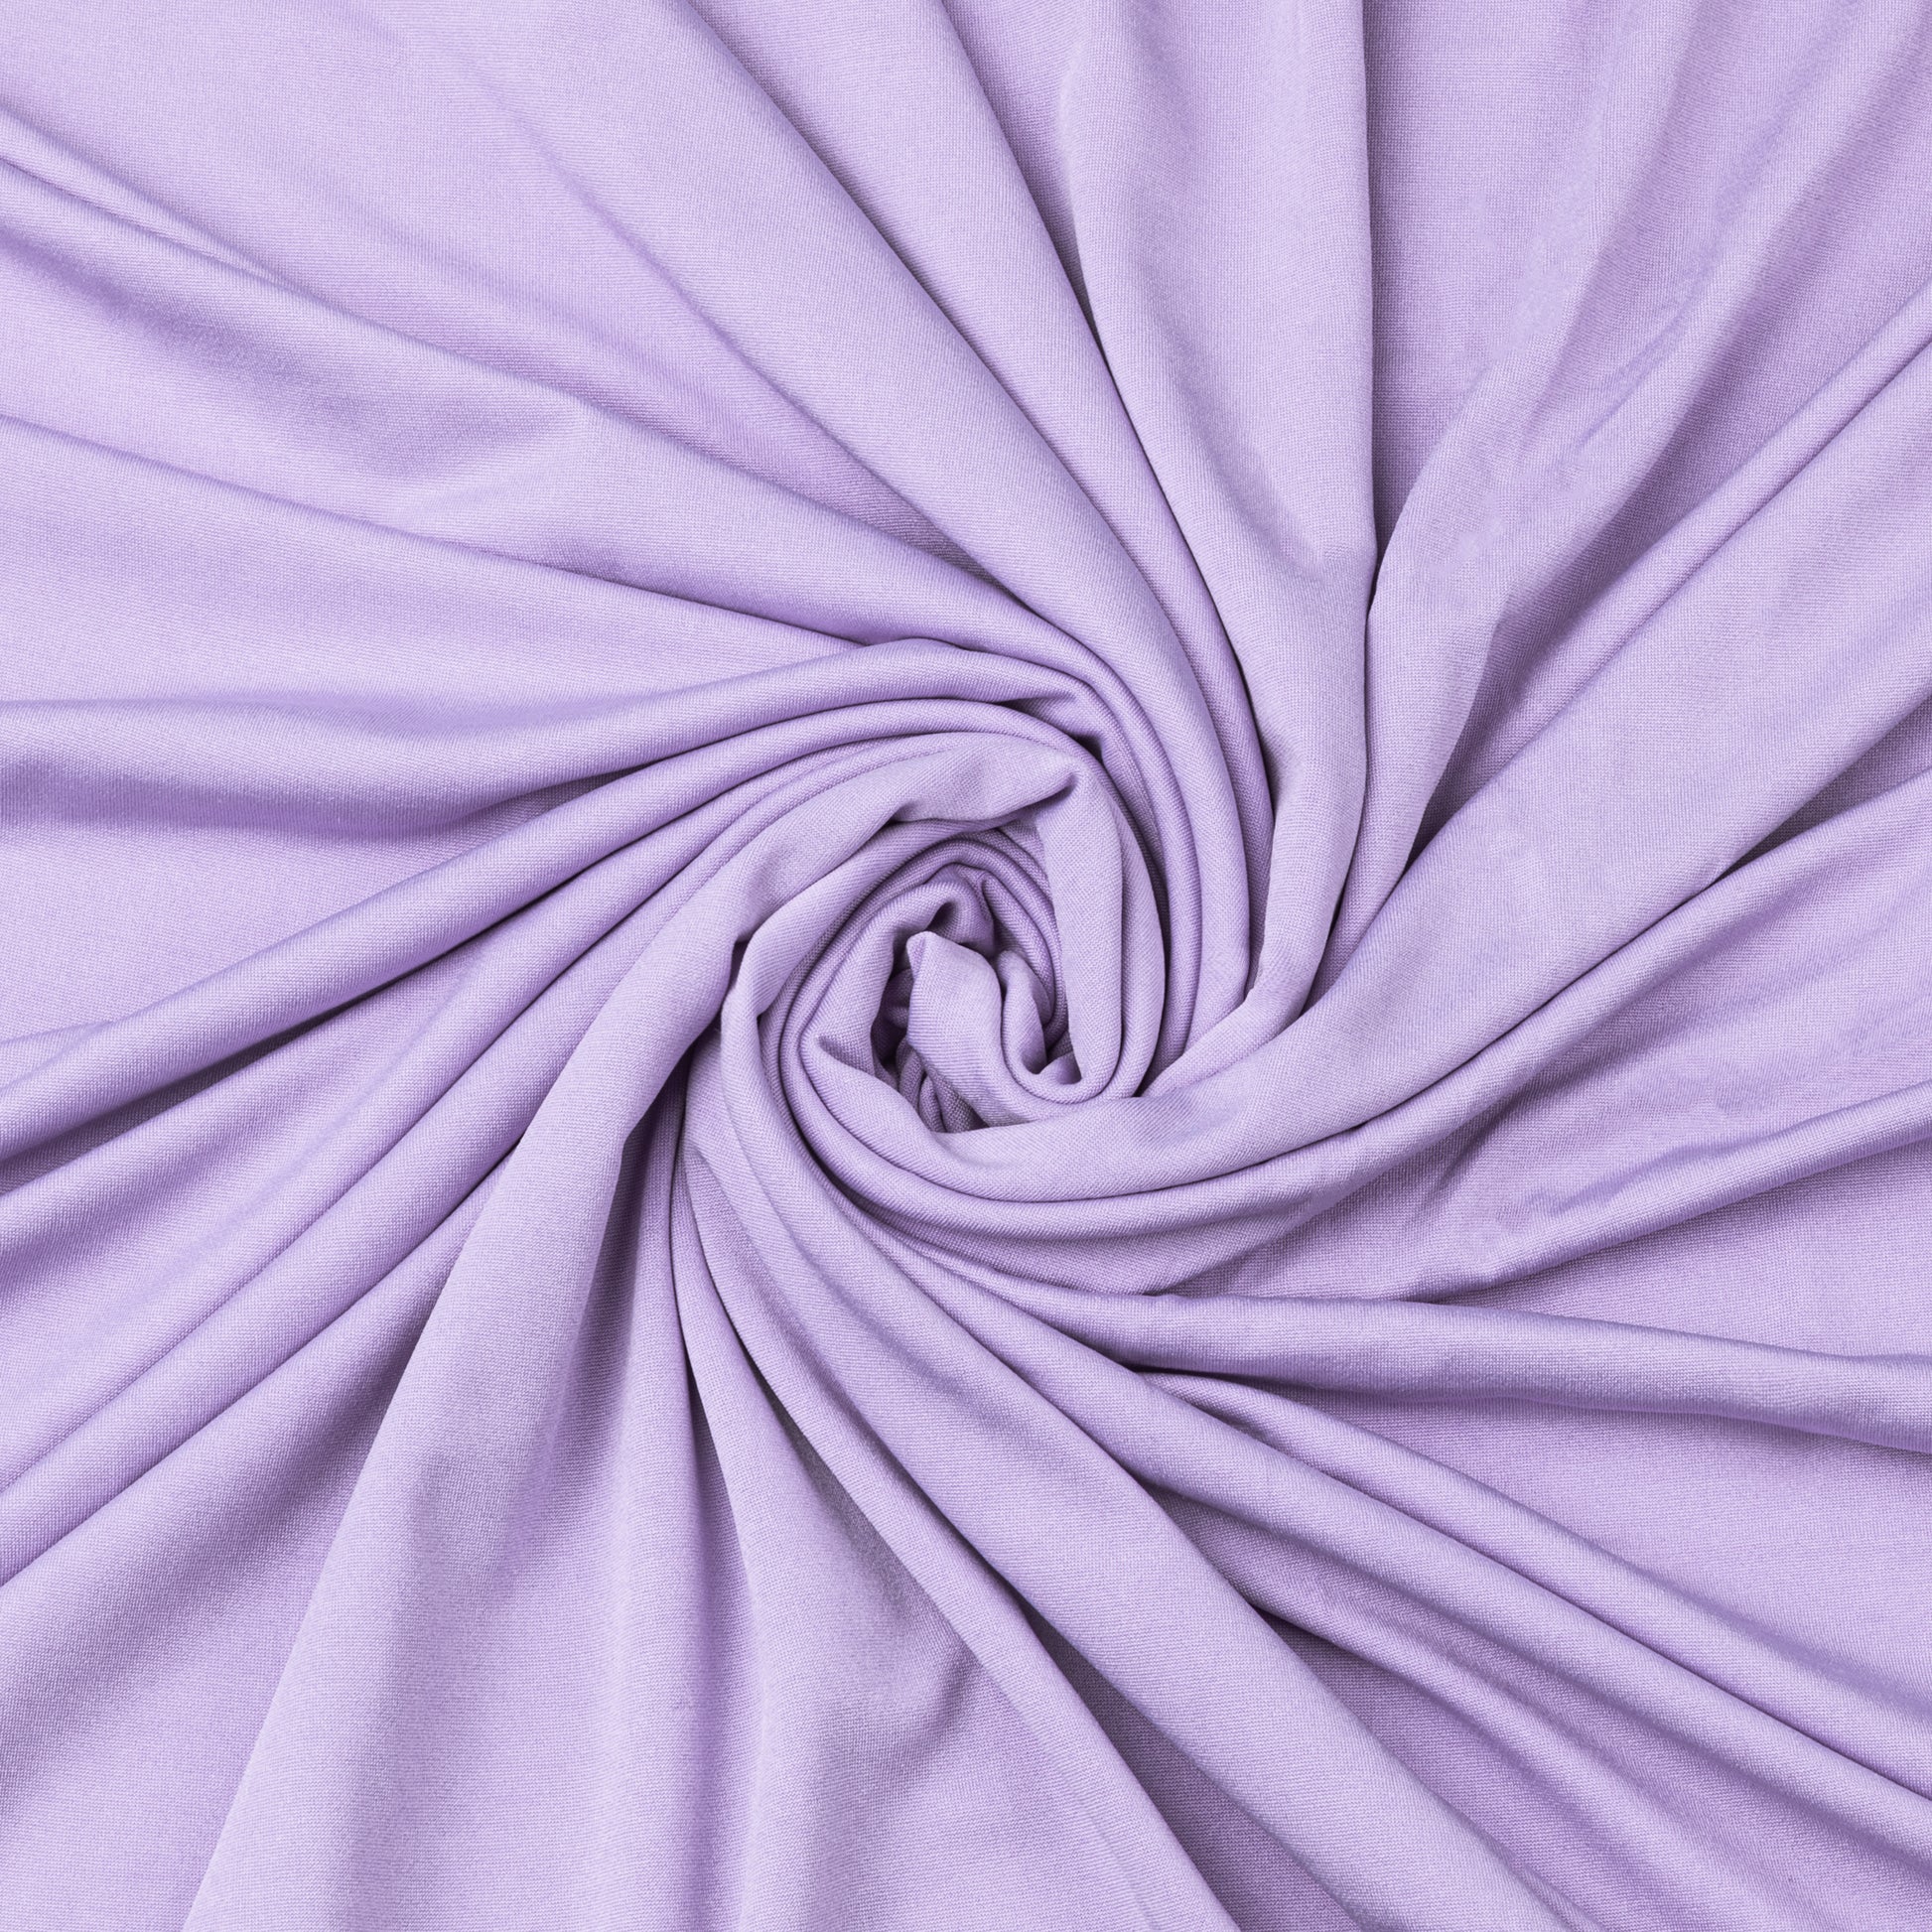 CV Linens Spandex Stretch 4-Way Fabric Roll 10 yds 58 - Lavender